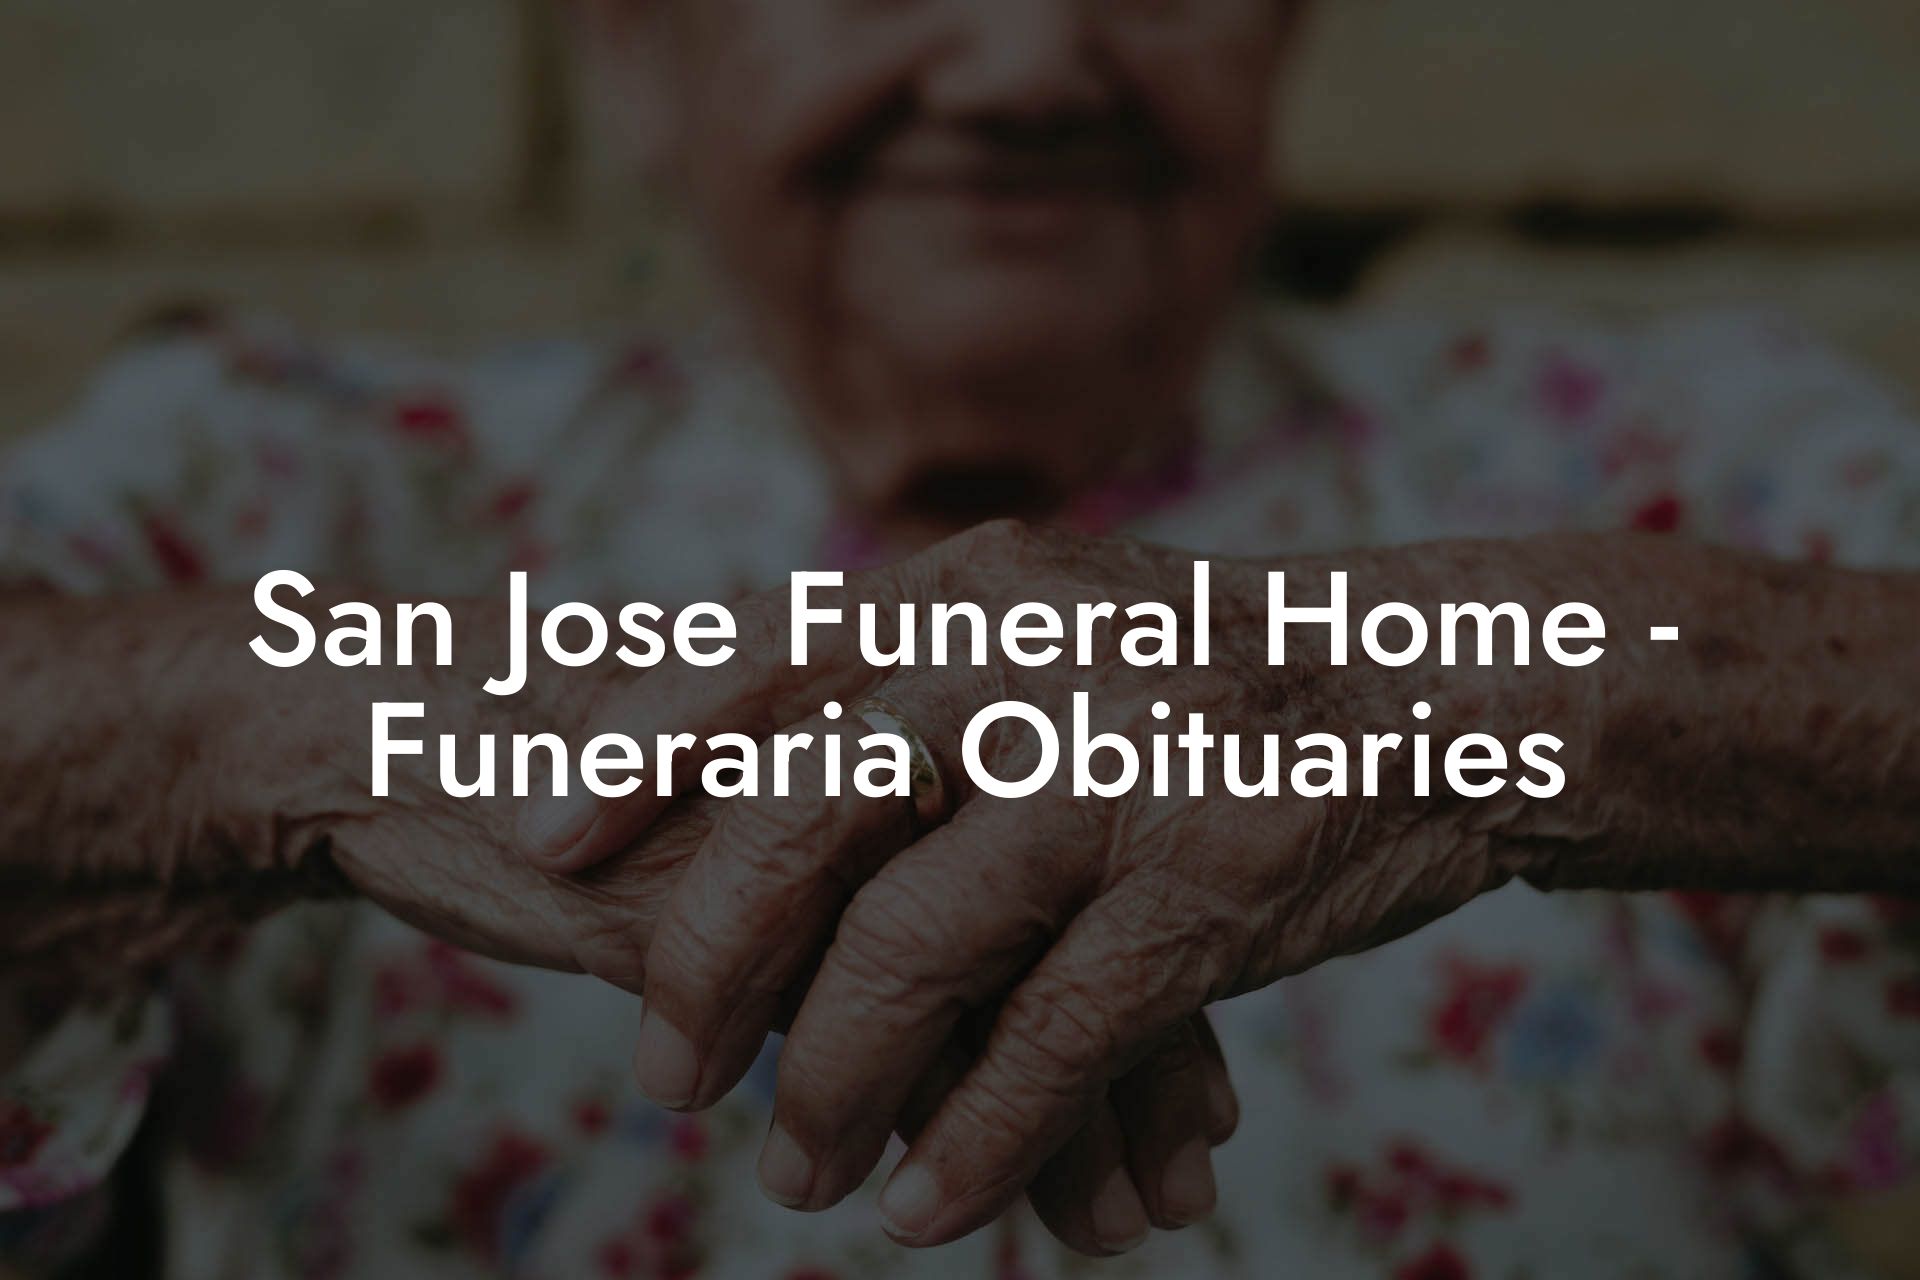 San Jose Funeral Home - Funeraria Obituaries